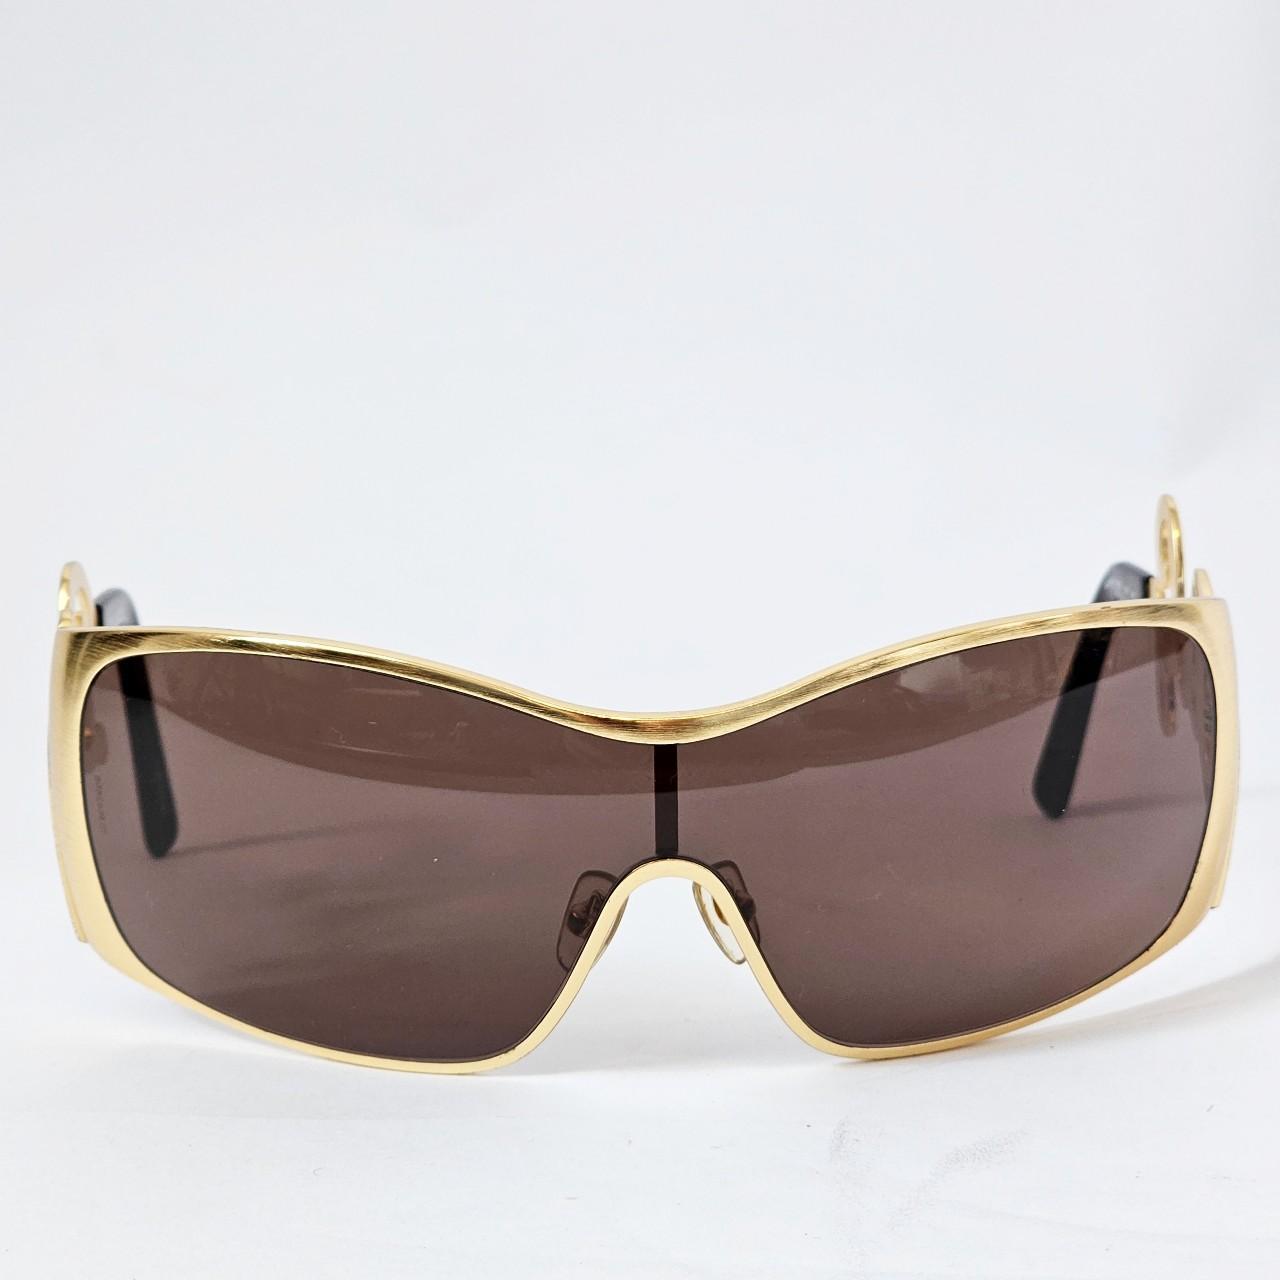 Dolce & Gabbana Women's Black and Gold Sunglasses - 5